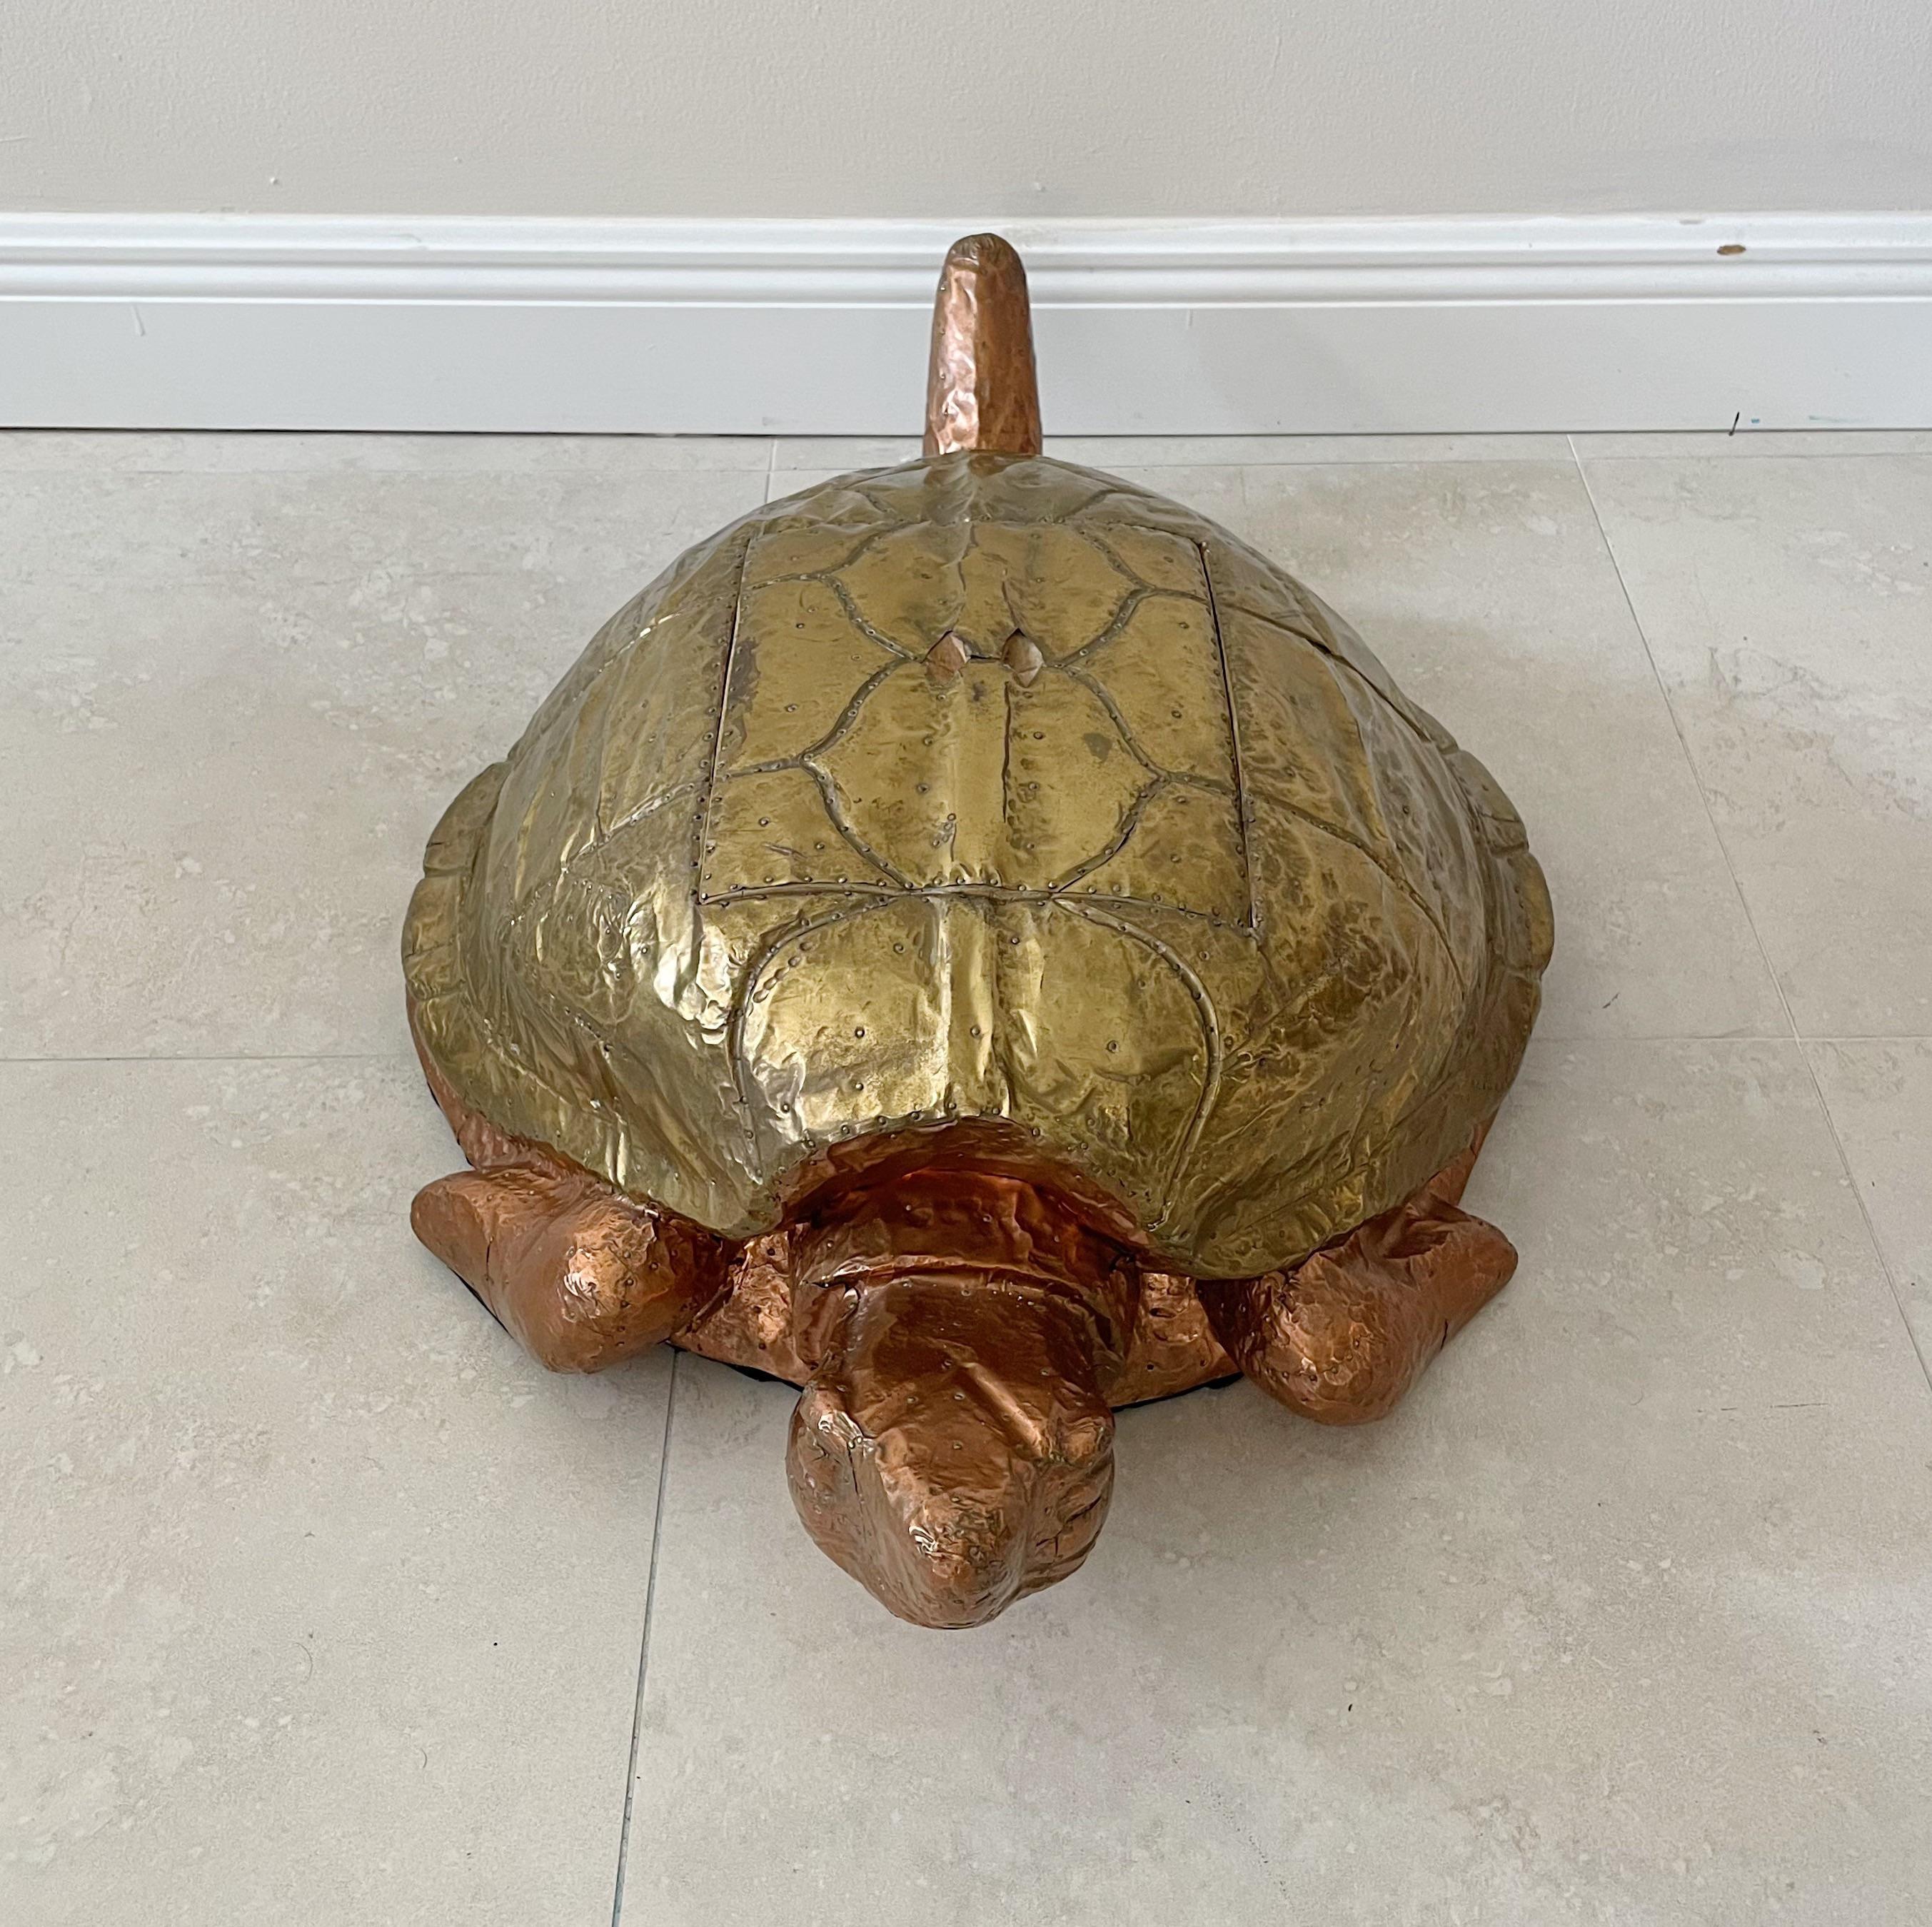 arthur the turtle